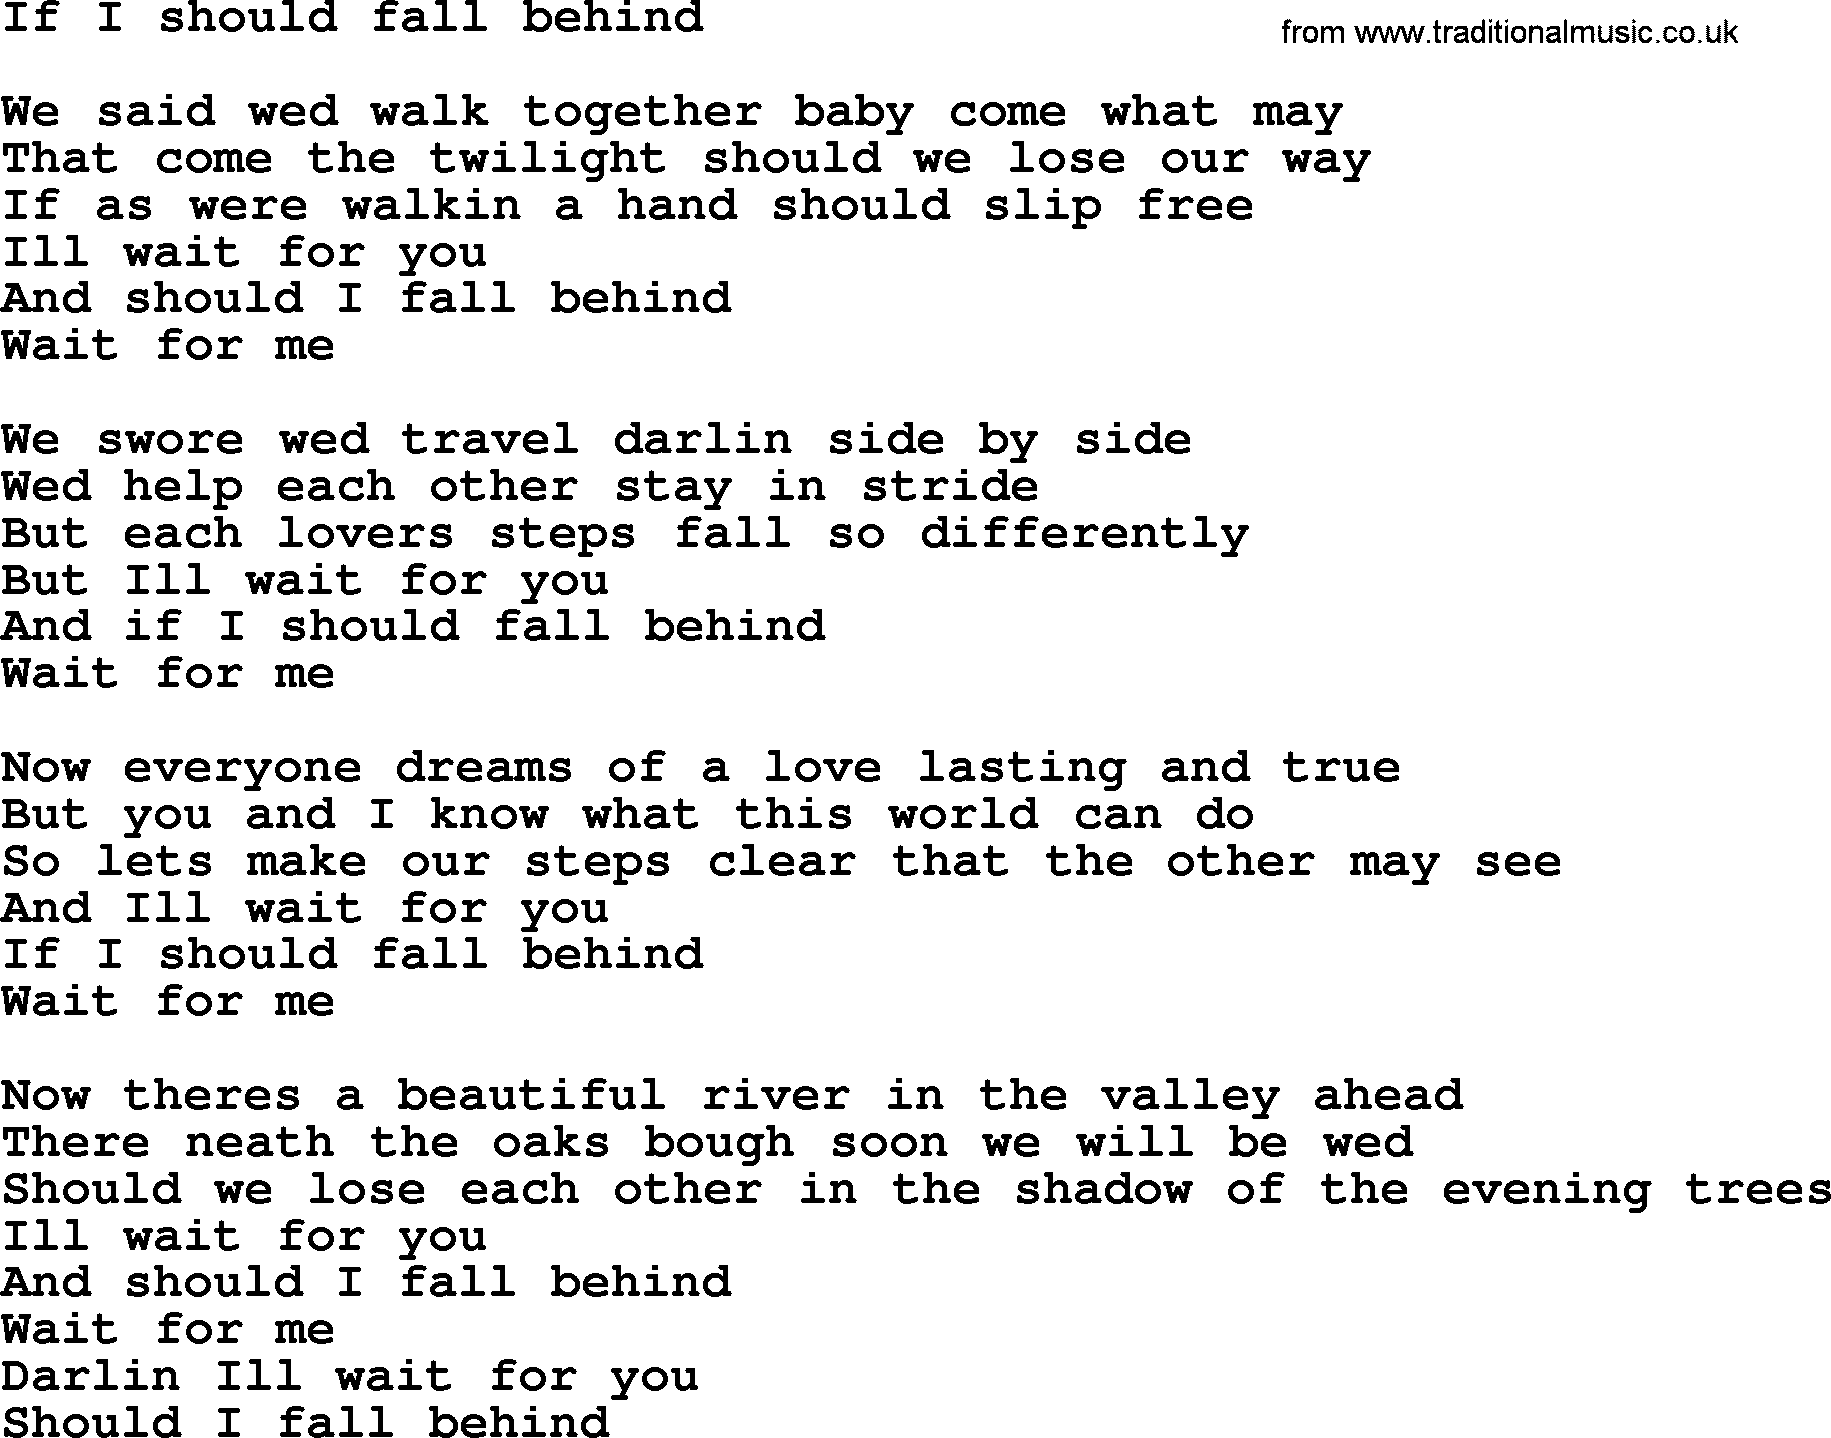 Bruce Springsteen song: If I Should Fall Behind lyrics